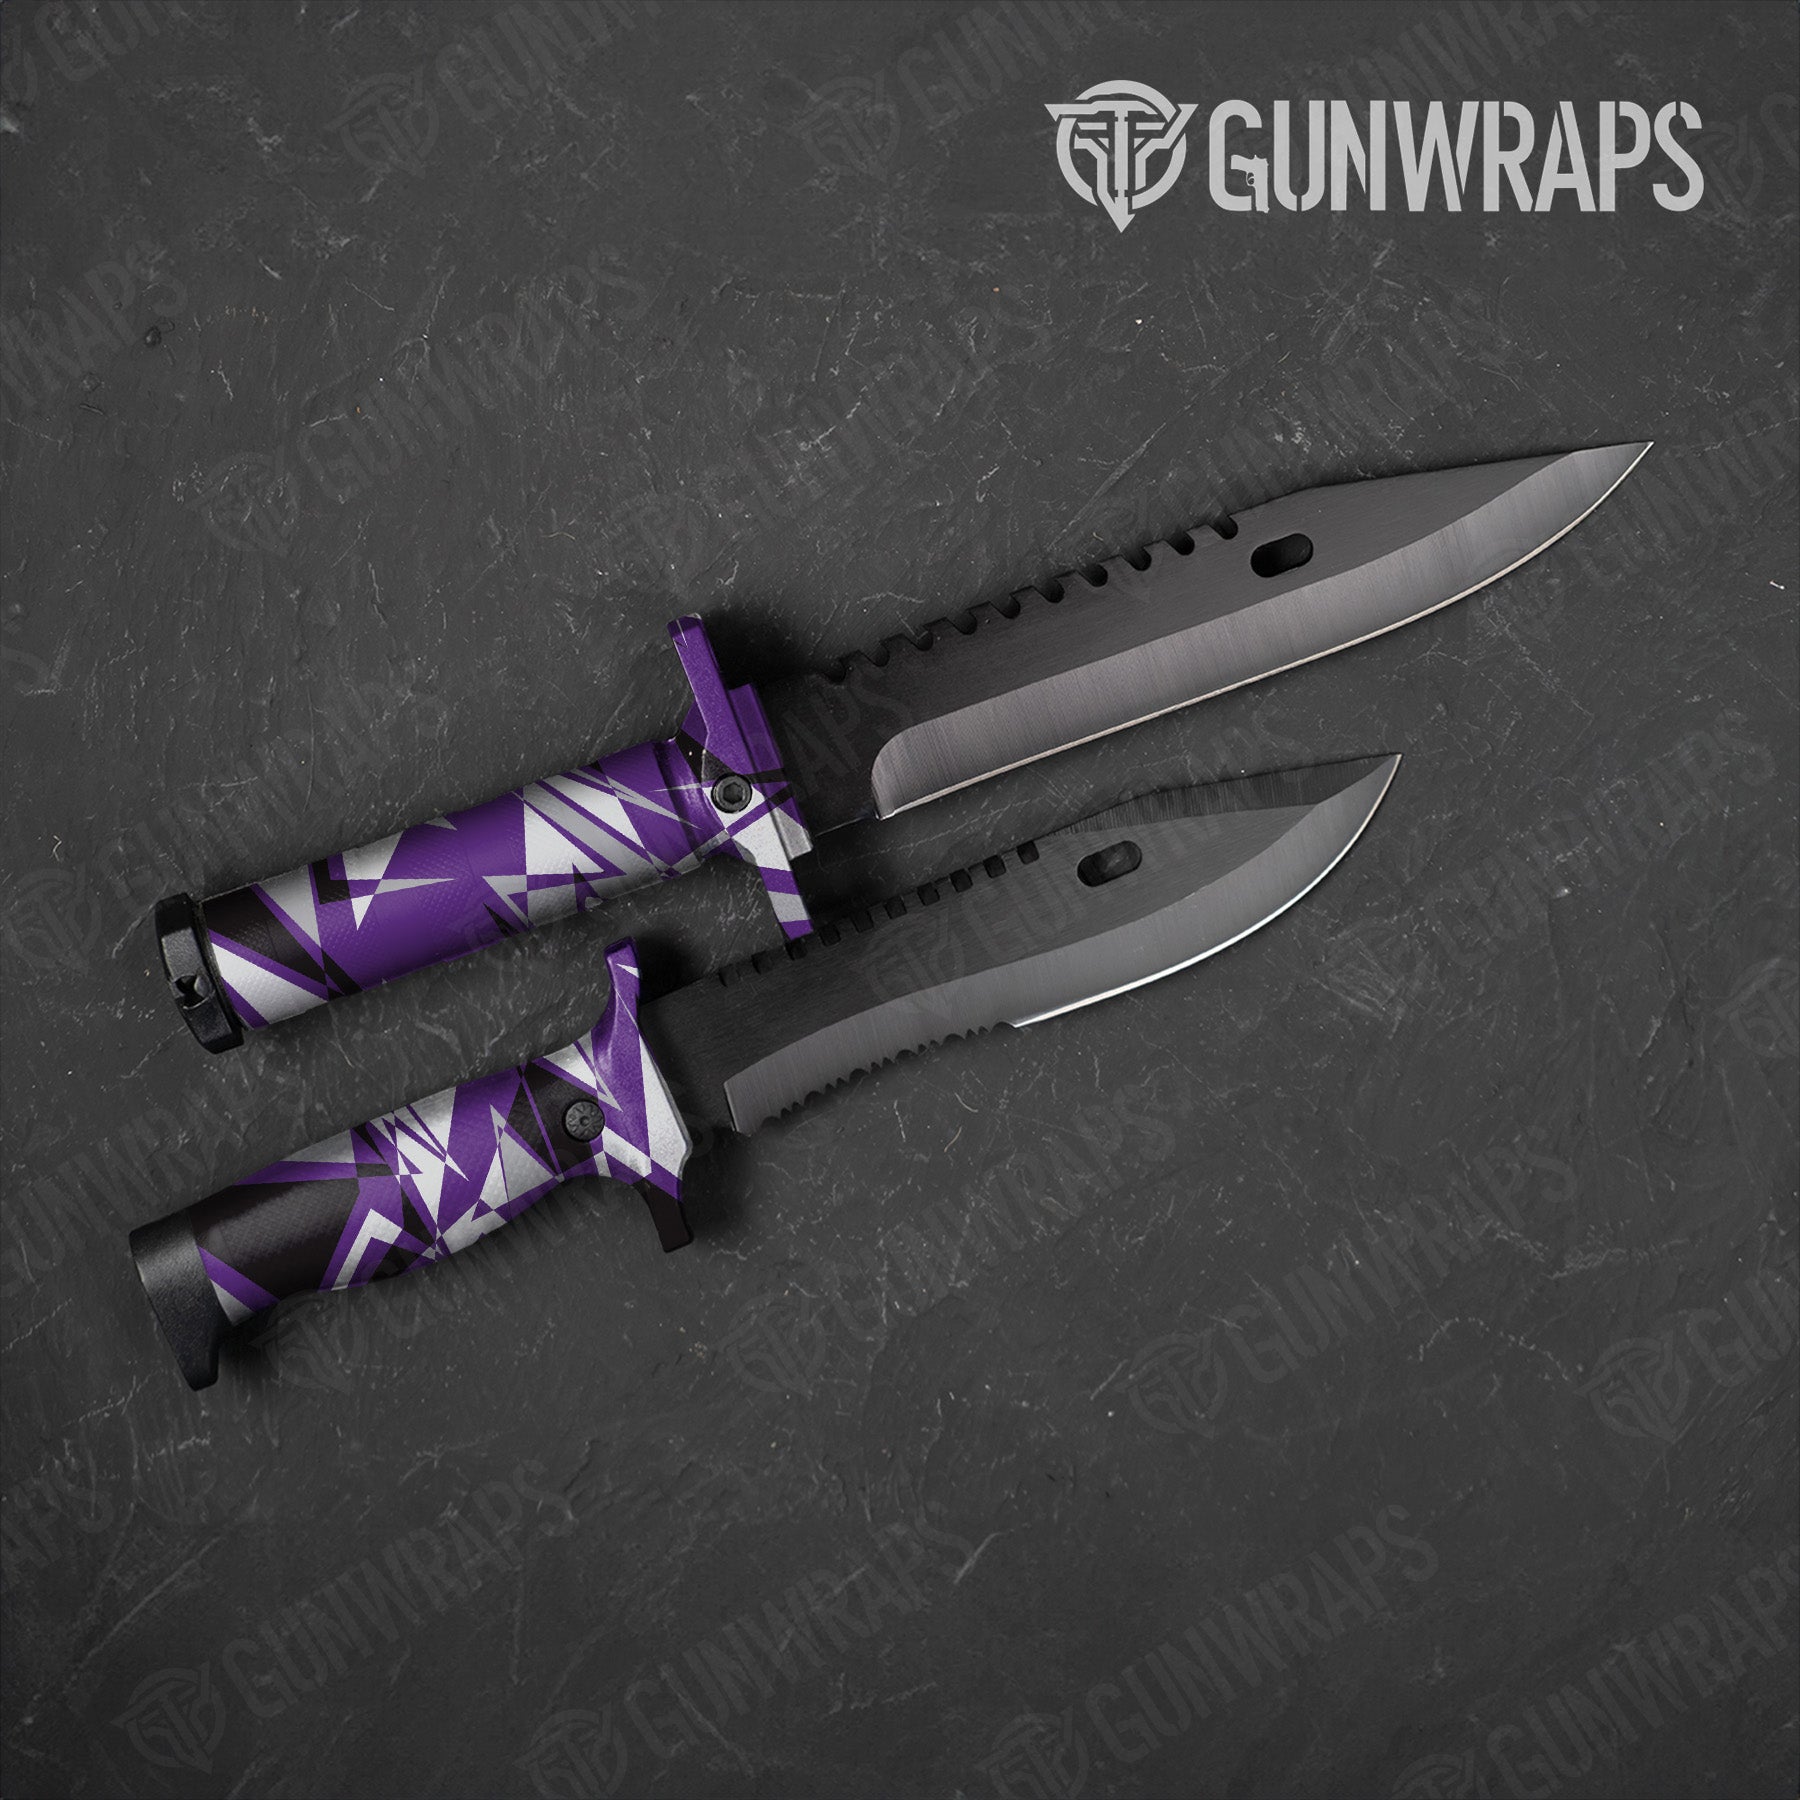 Sharp Purple Tiger Camo Knife Gear Skin Vinyl Wrap